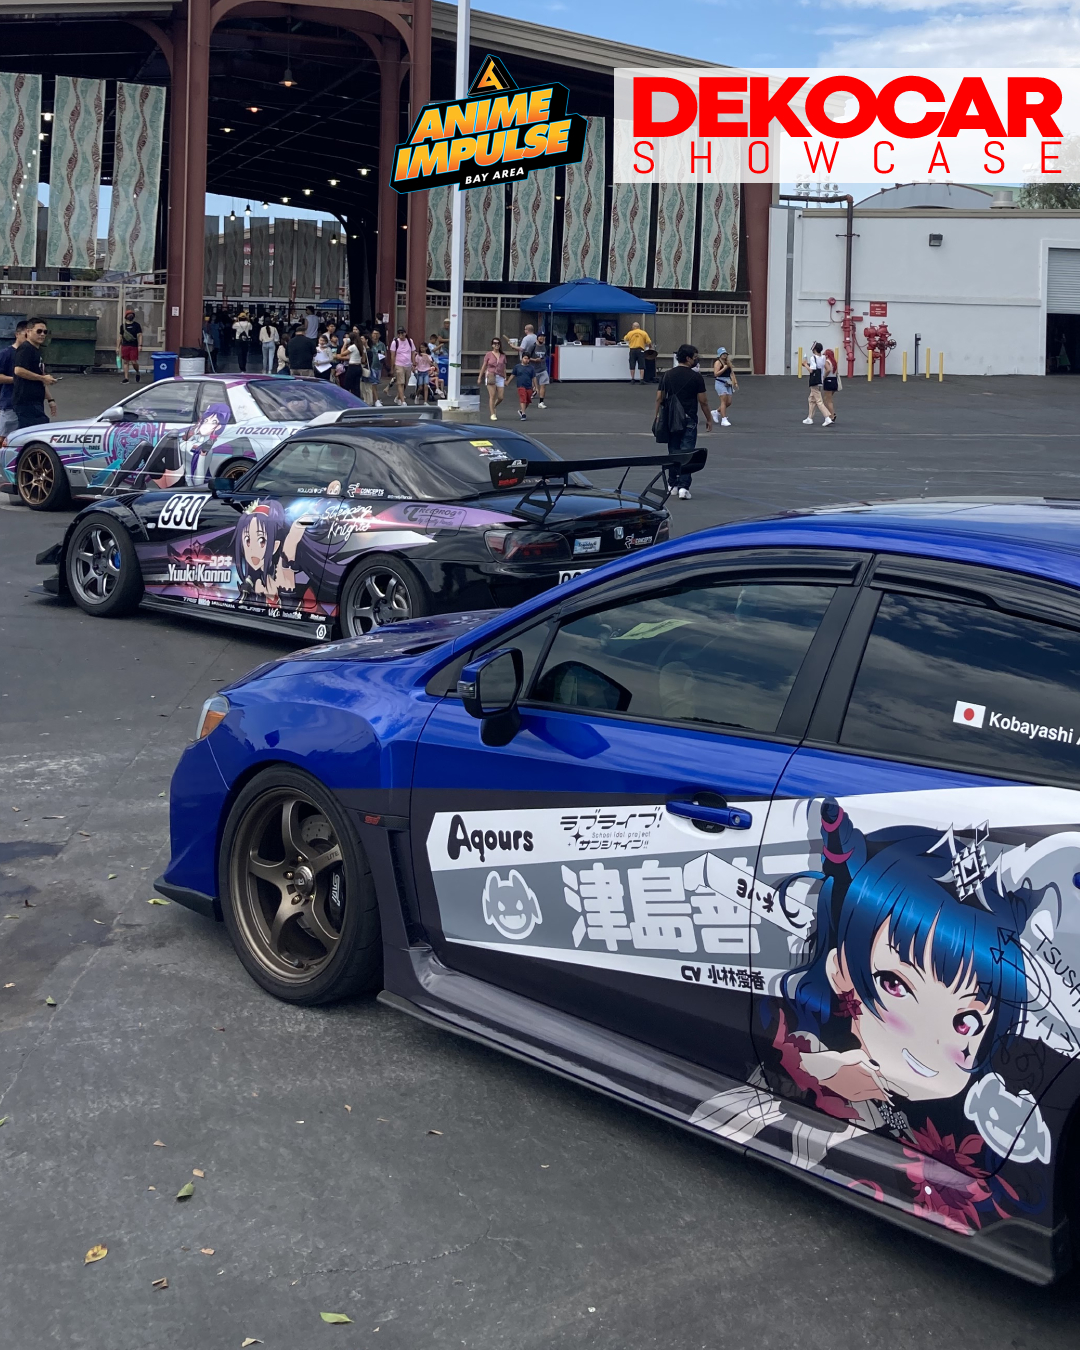 Dekocar Phenomenon: Anime and Manga Fans Turn Their Cars Into